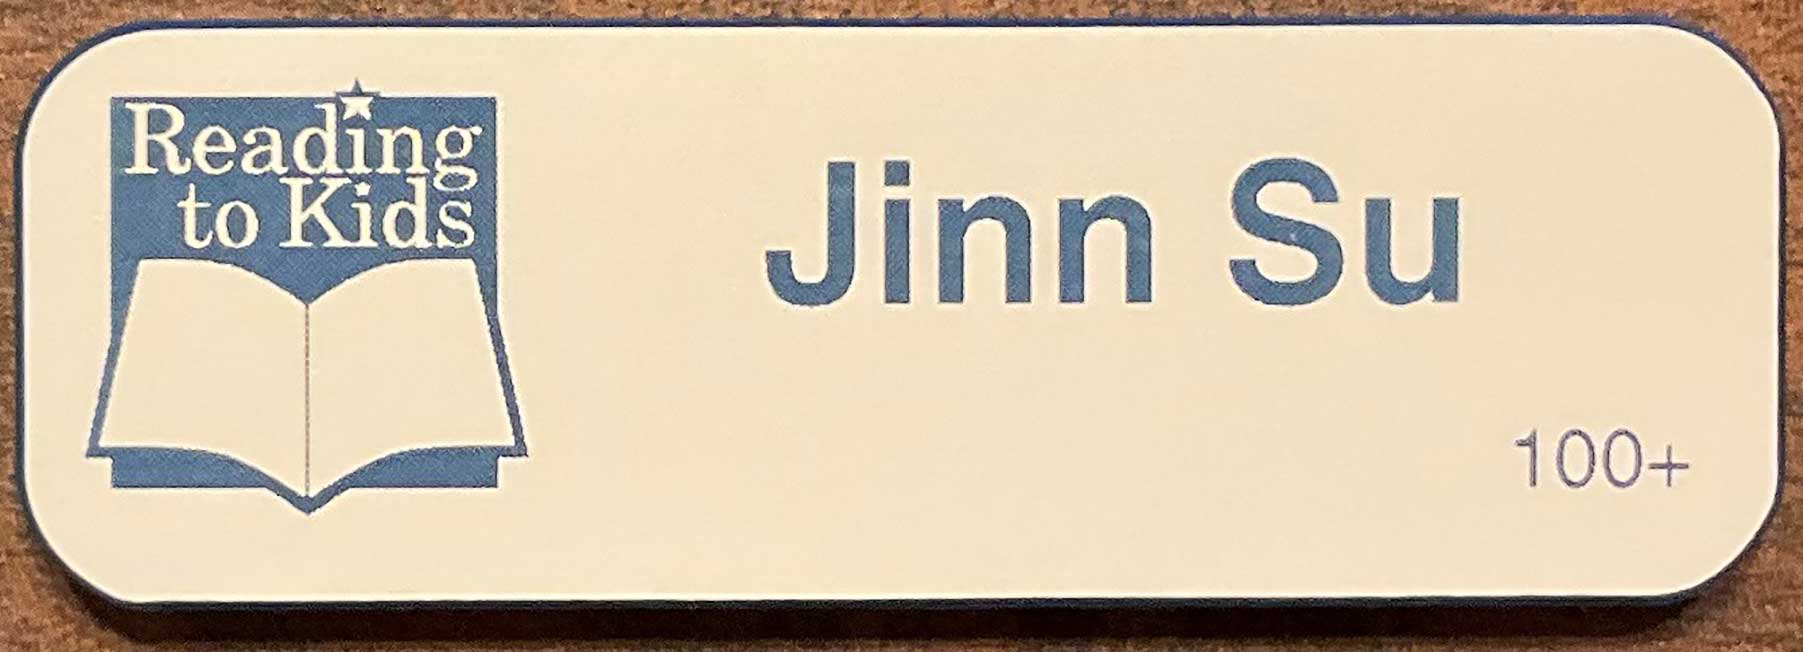 Jinn Su 100th Name Badge